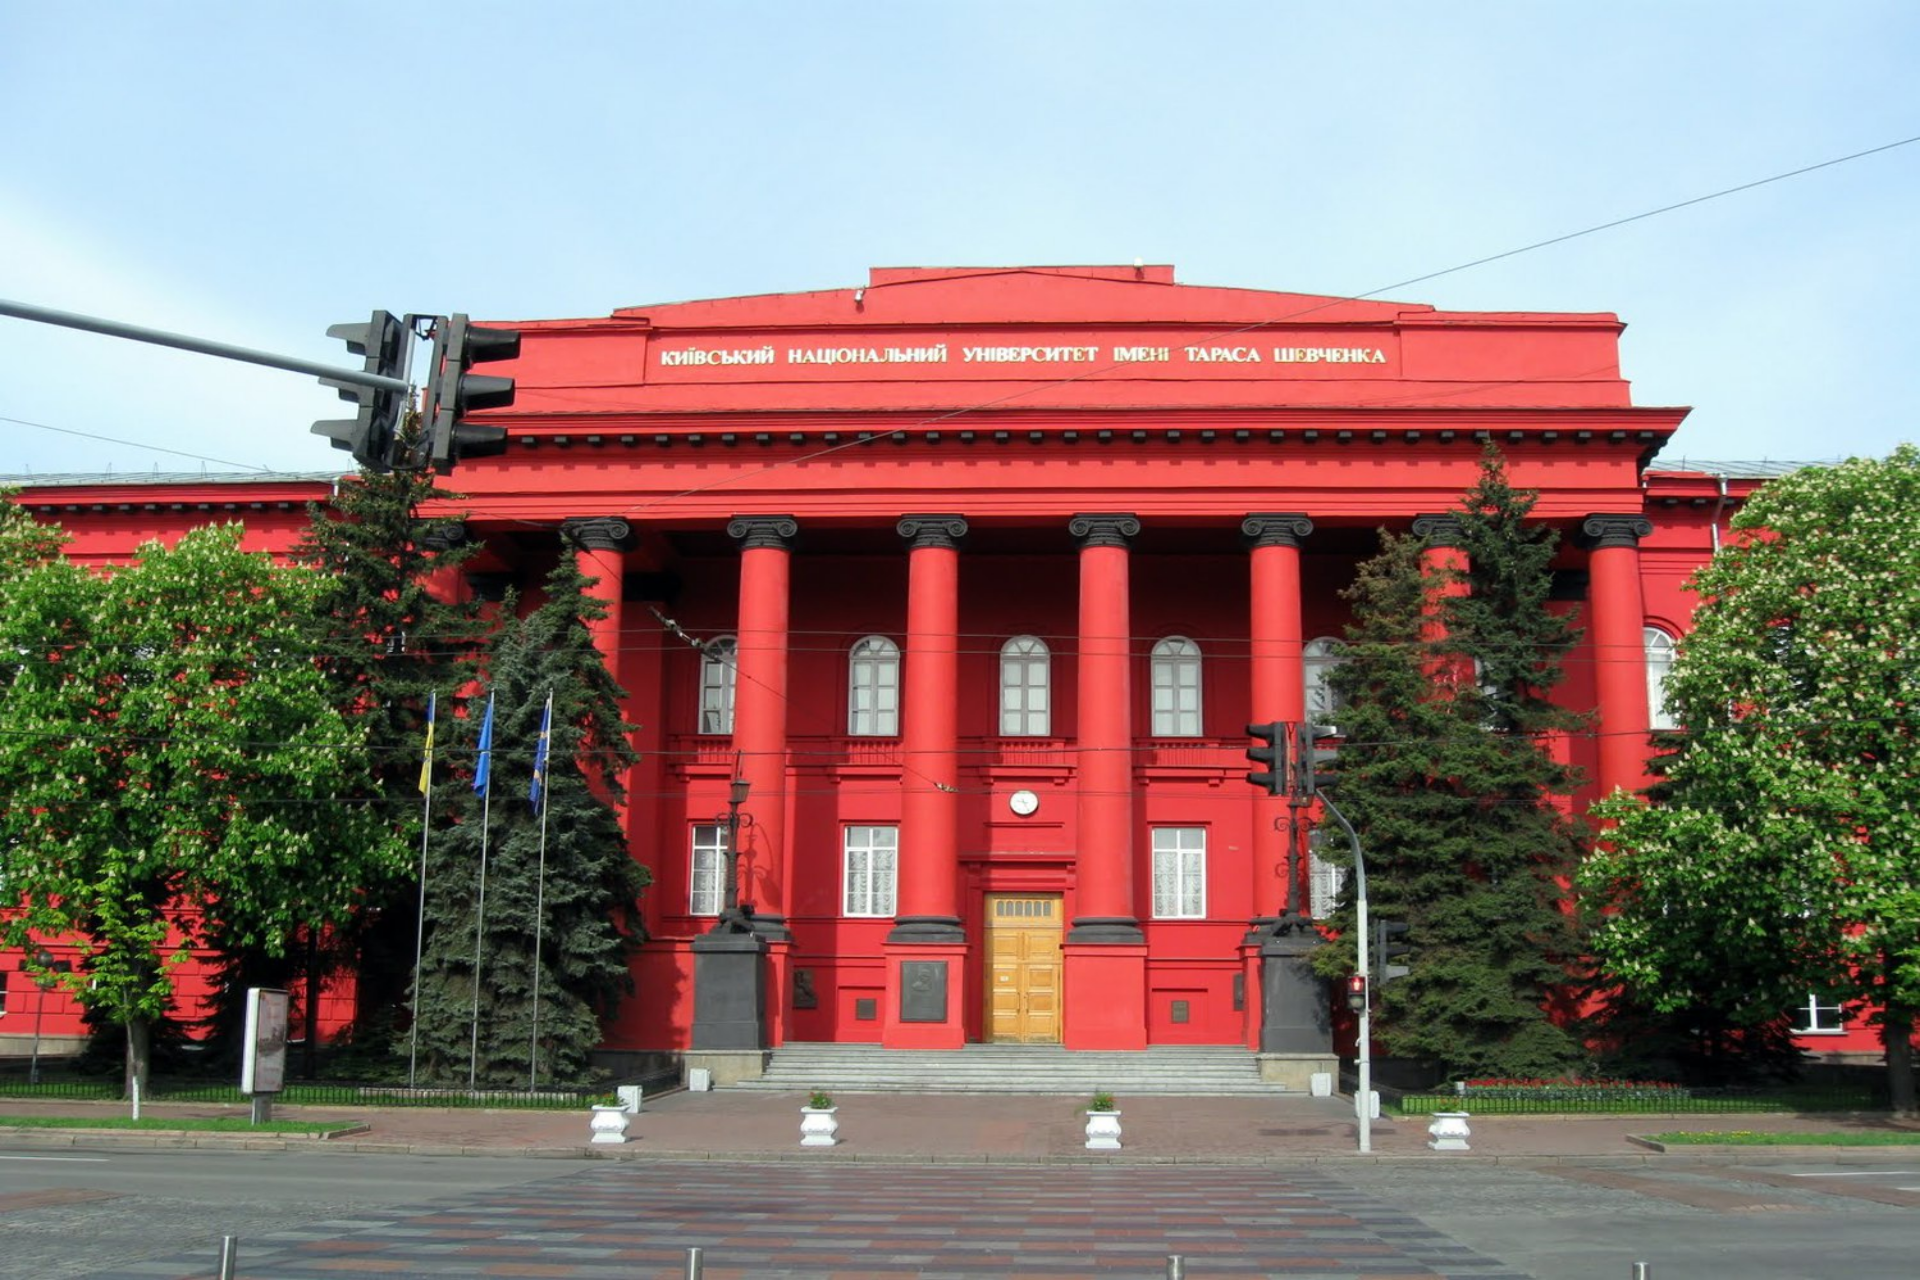 Study palace hub (MBBS in Ukraine)(Taras Shevchenko National University)